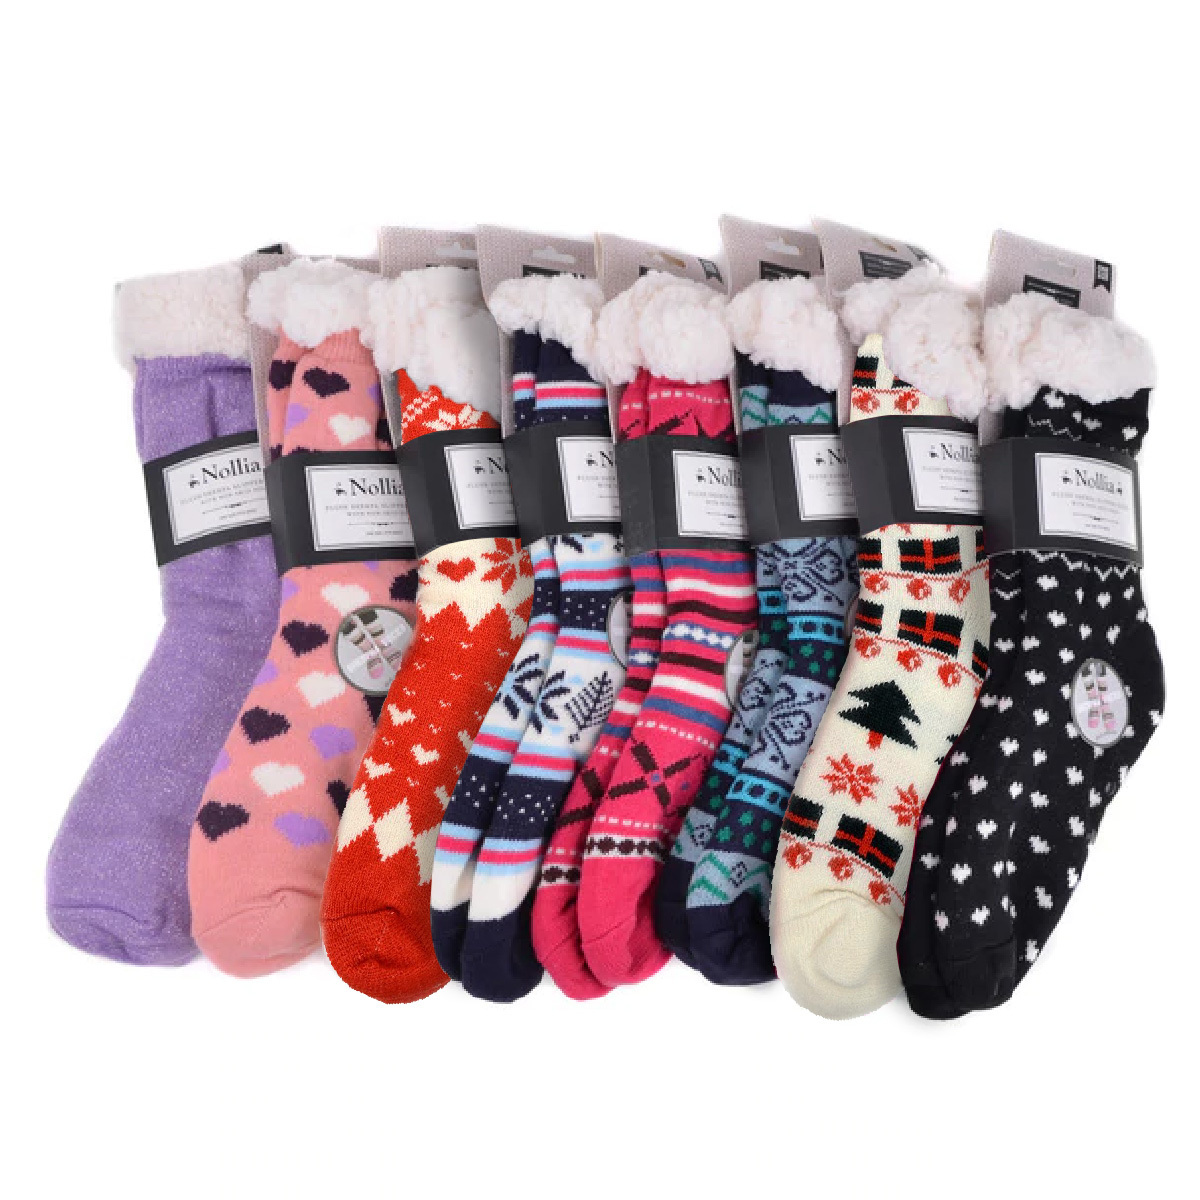 Wholesale Fleece Slipper Socks - 24 Pairs, Assorted Patterns